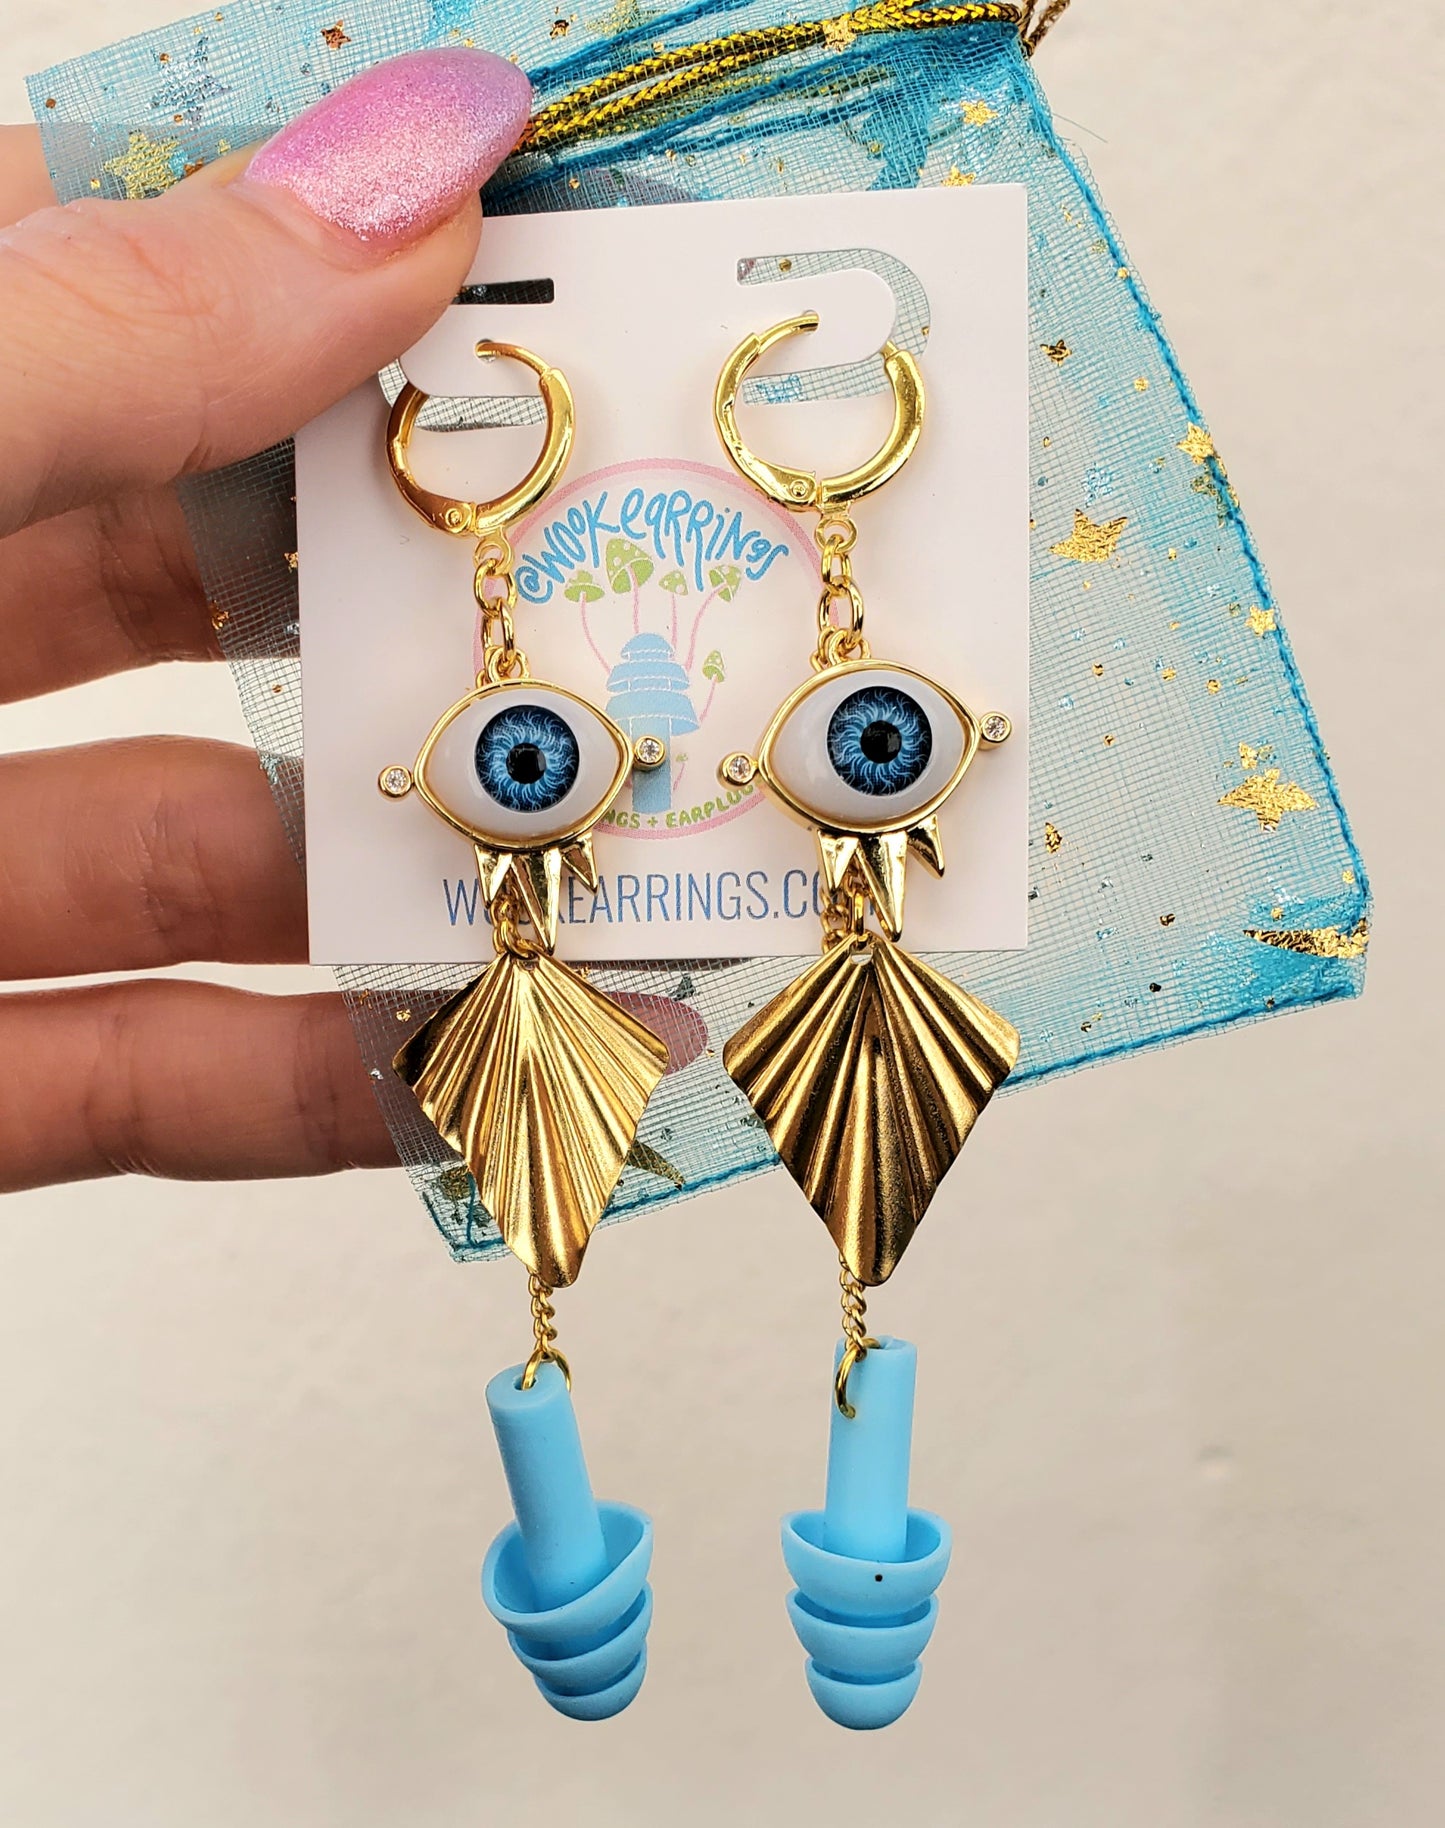 Eyeball Earplug earrings